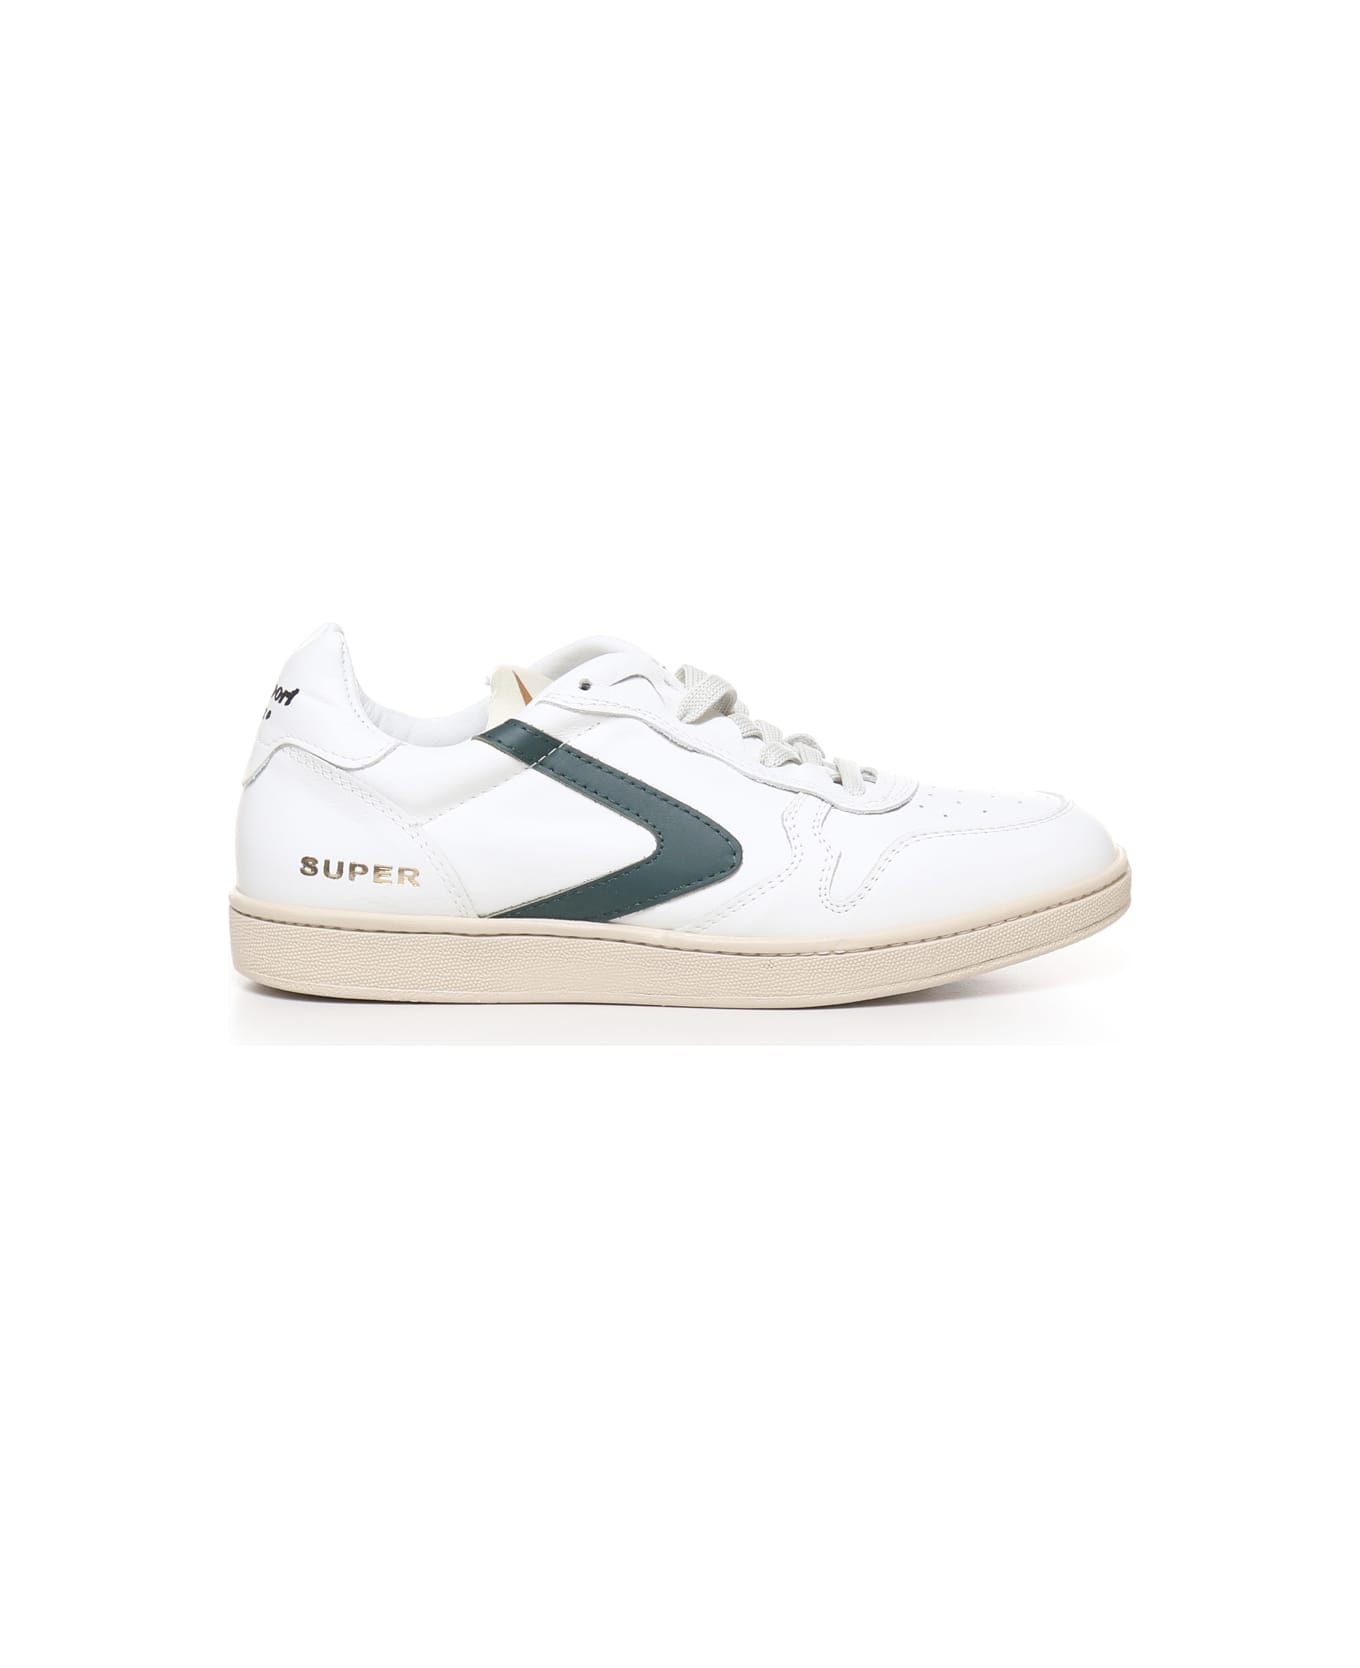 Valsport Sneakers Super 20 - White, green